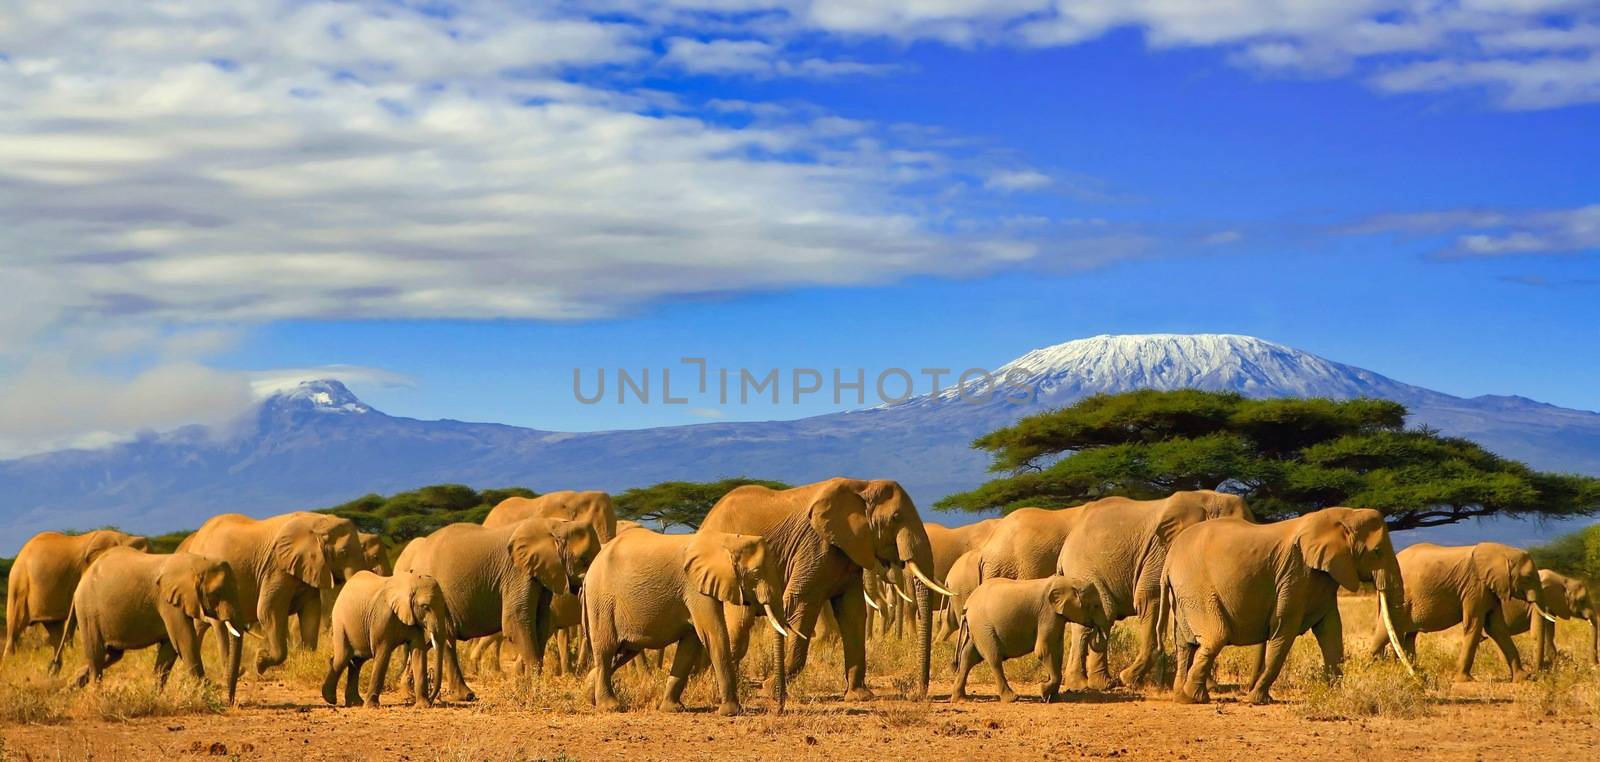 Kilimanjaro And Elephants Africa Tanzania by 104paul